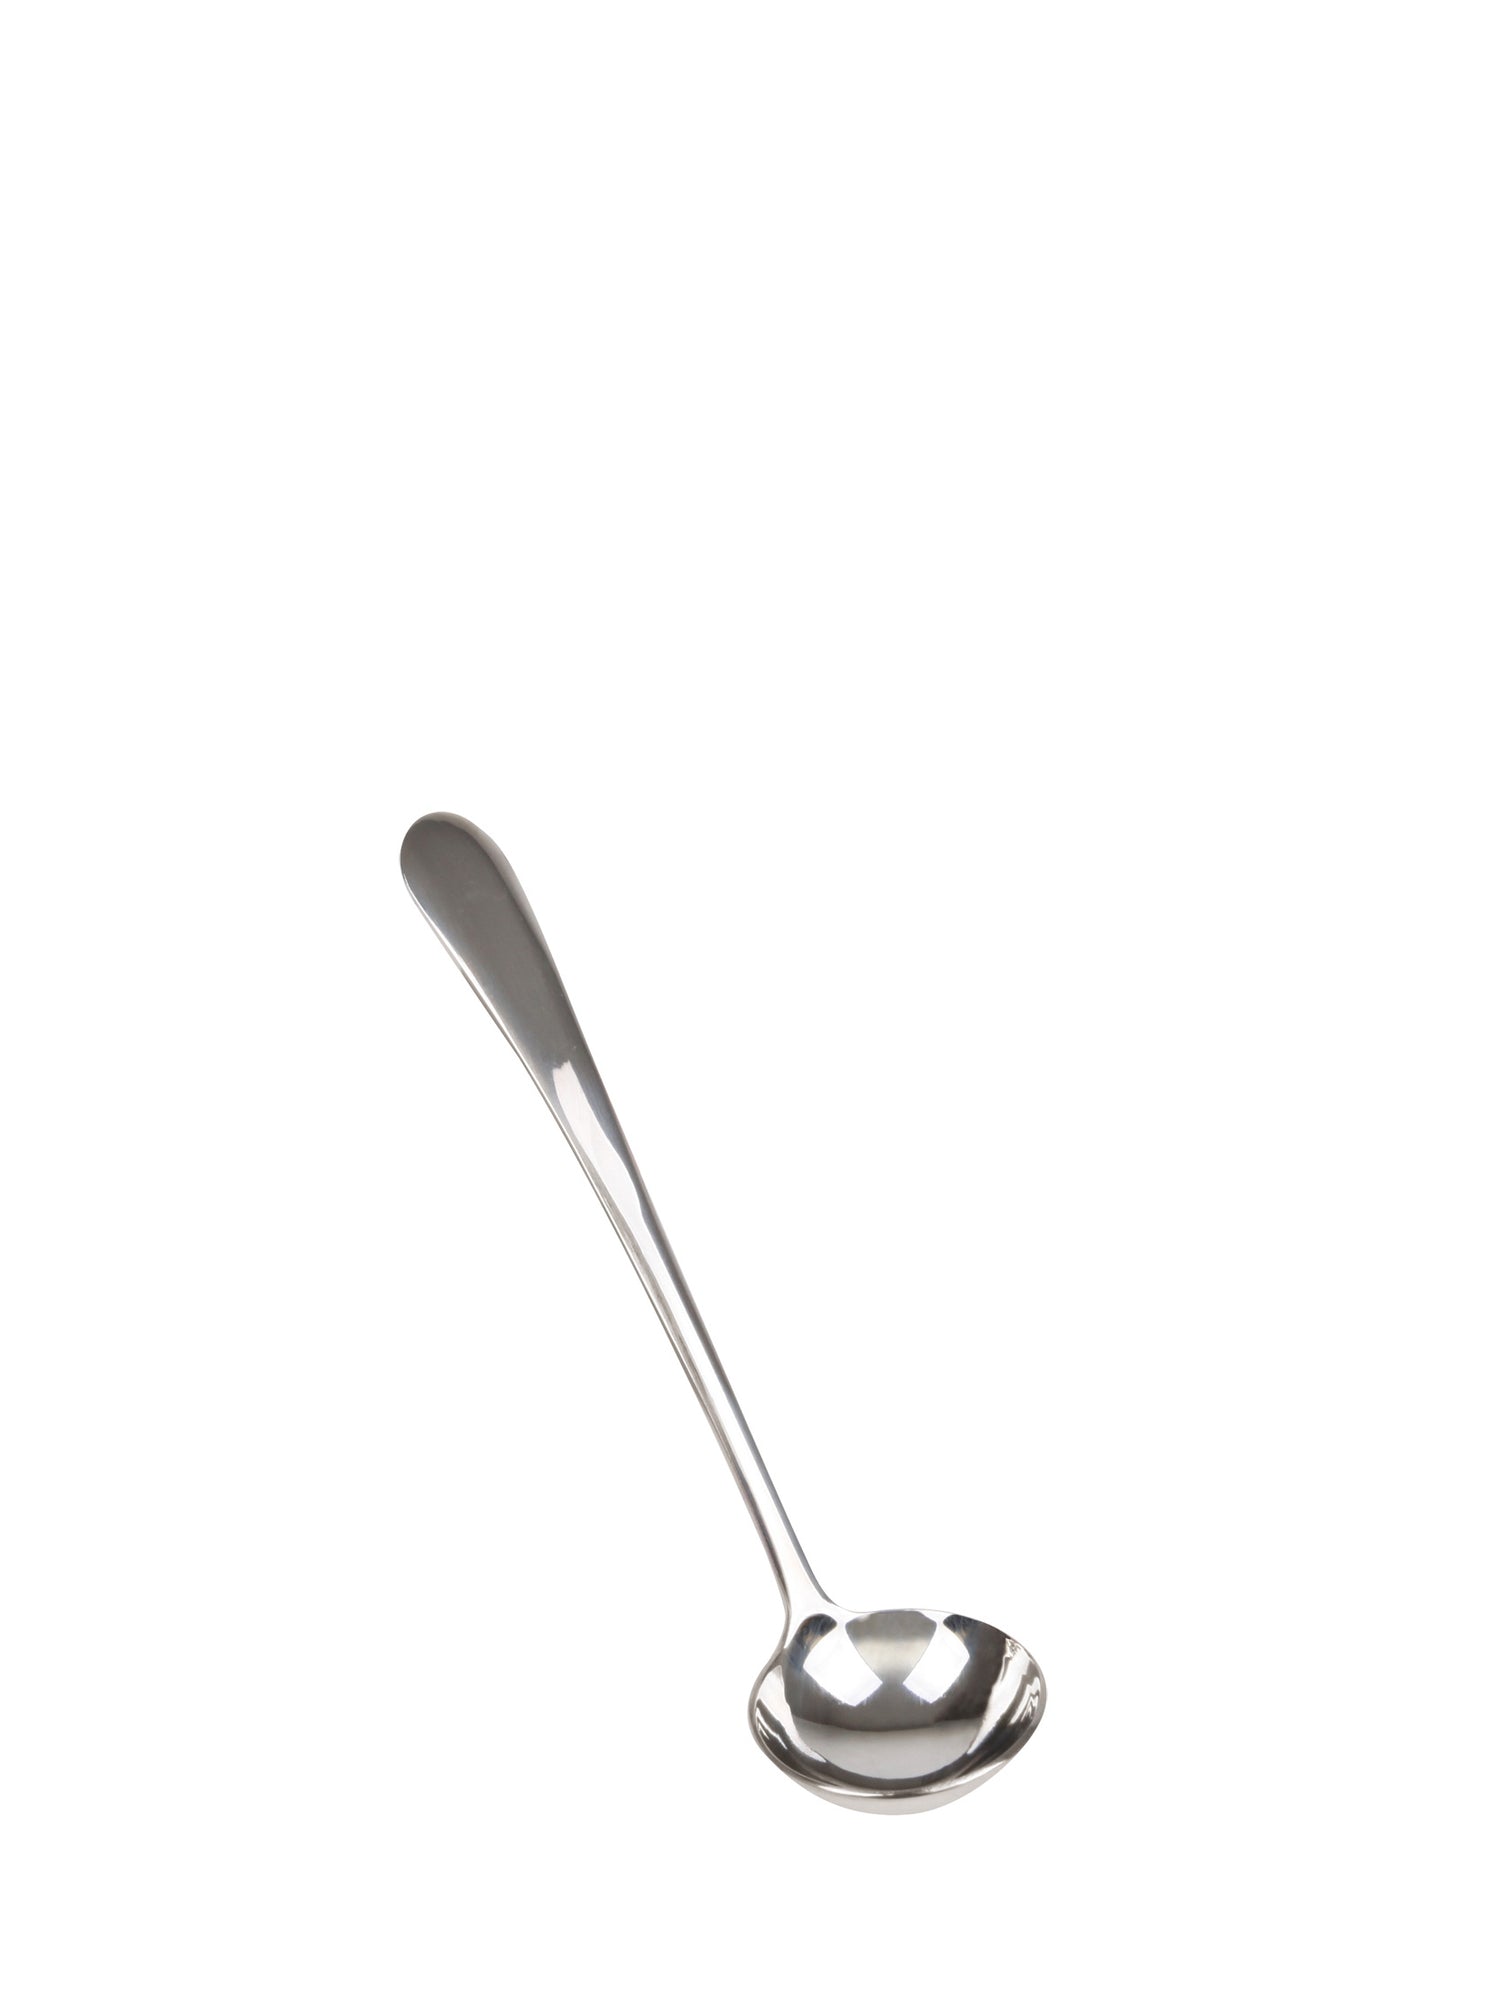 Steel jam spoon